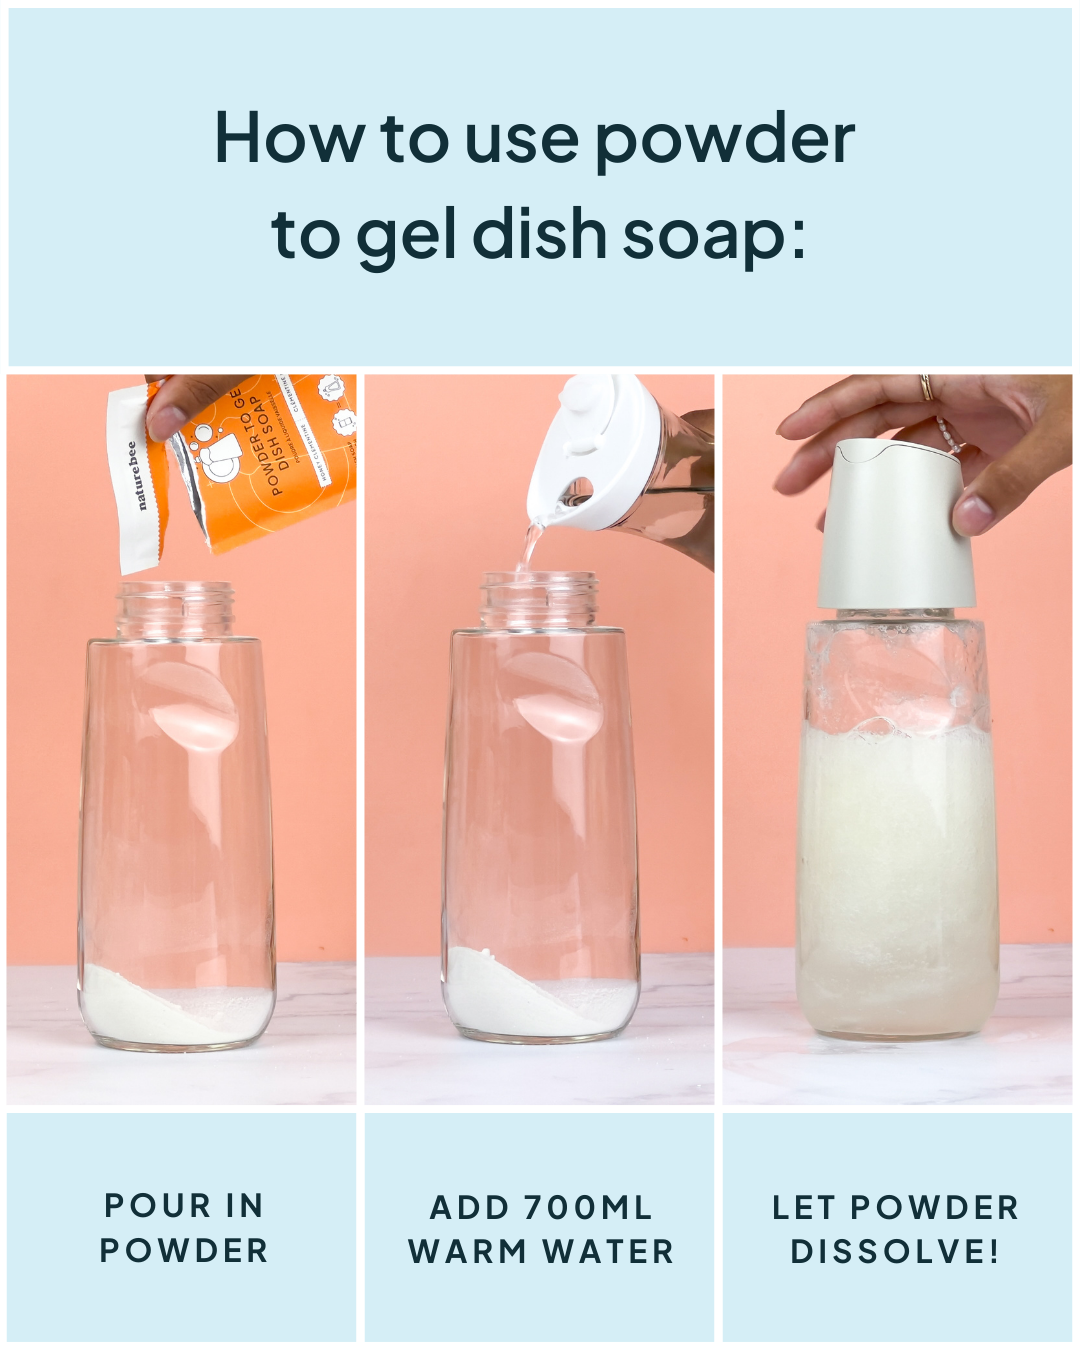 Powder to Gel Kitchen Dish soap  | Nature Bee